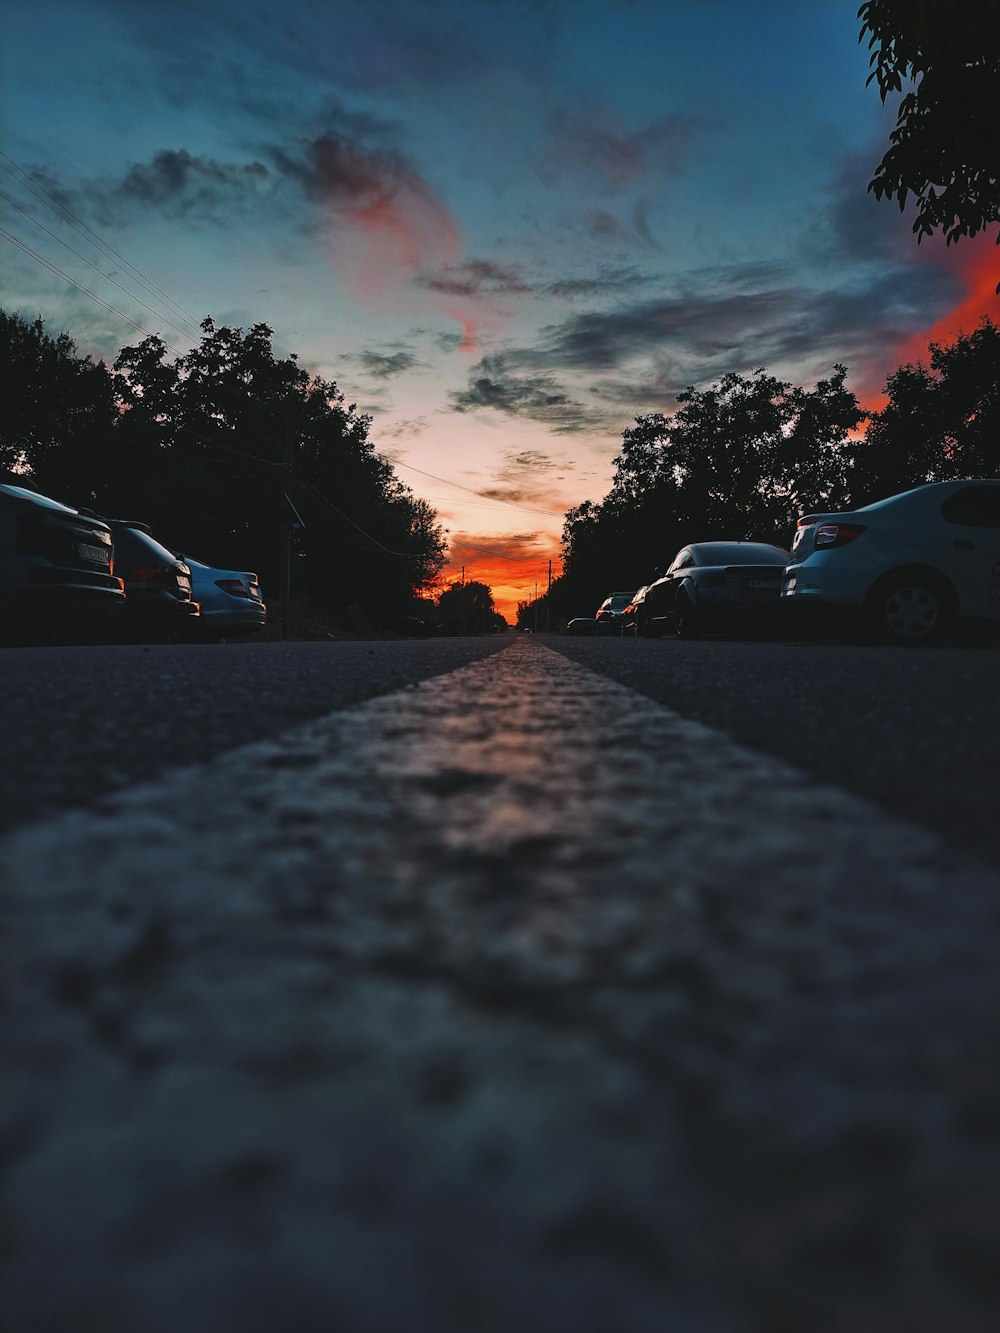 a sunset over a parking lot